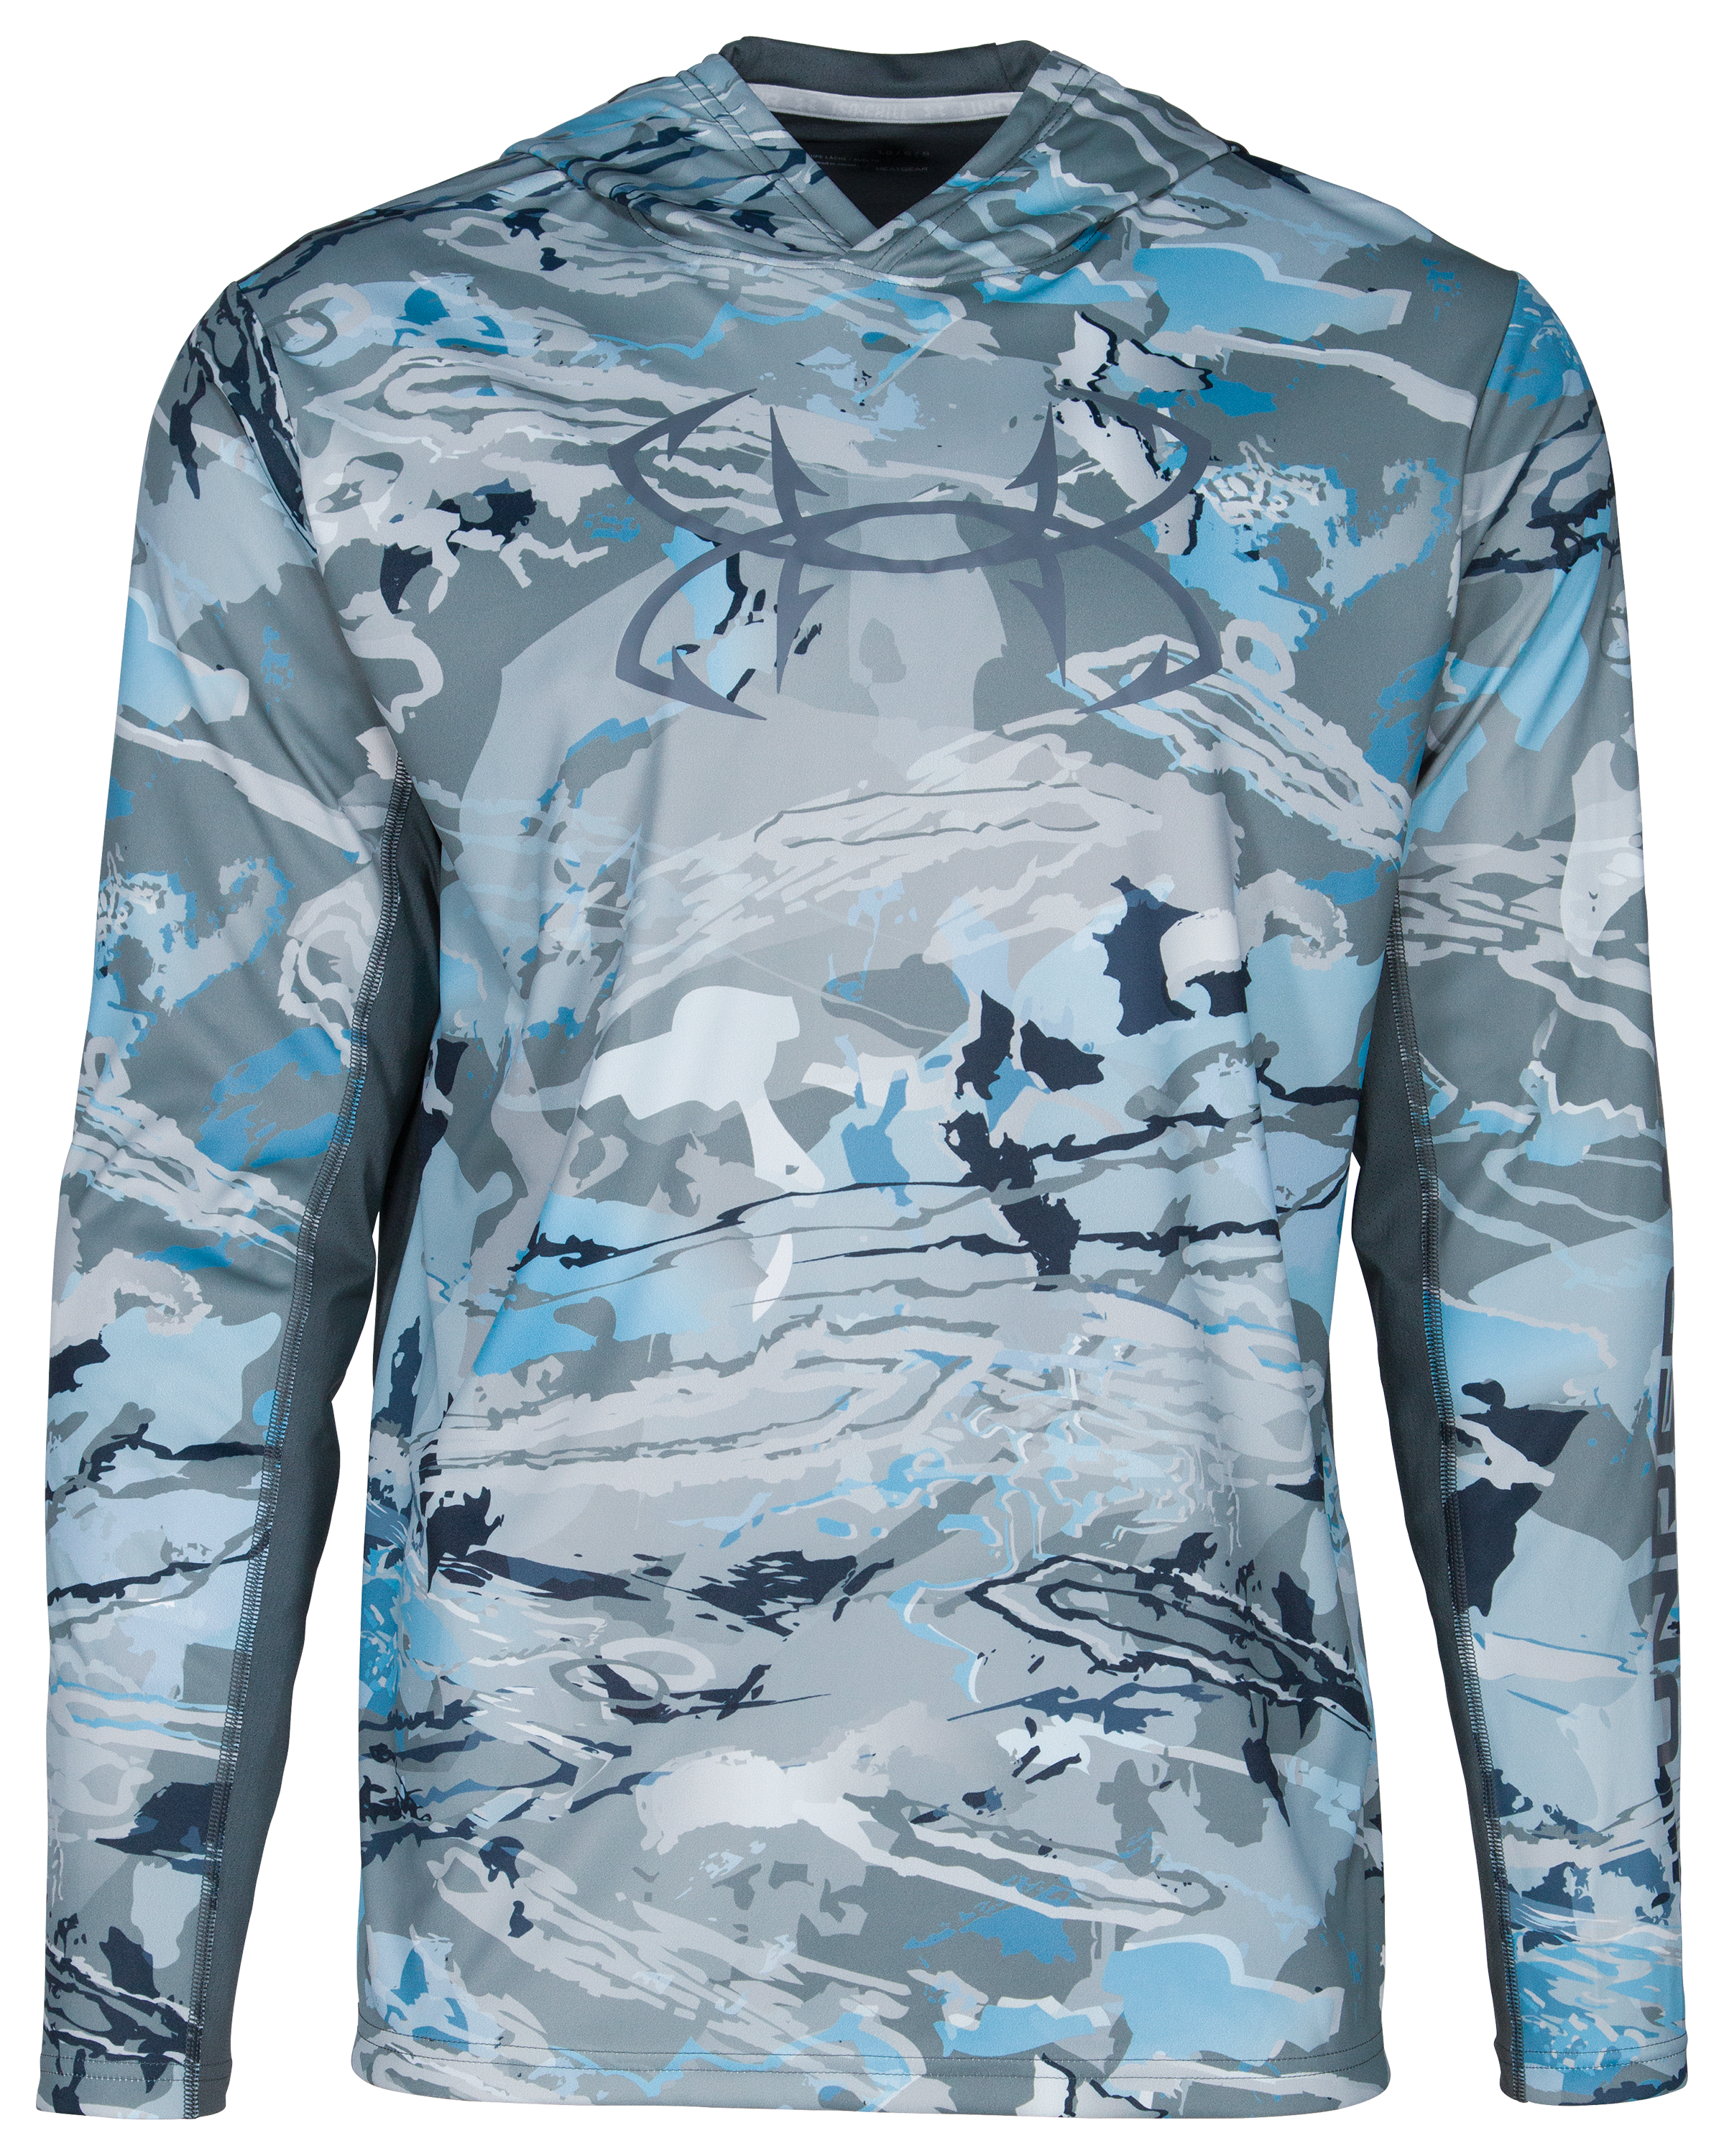 Under Armour Men's Iso-Chill Shorebreak Back Graphic Long Sleeve Shirt